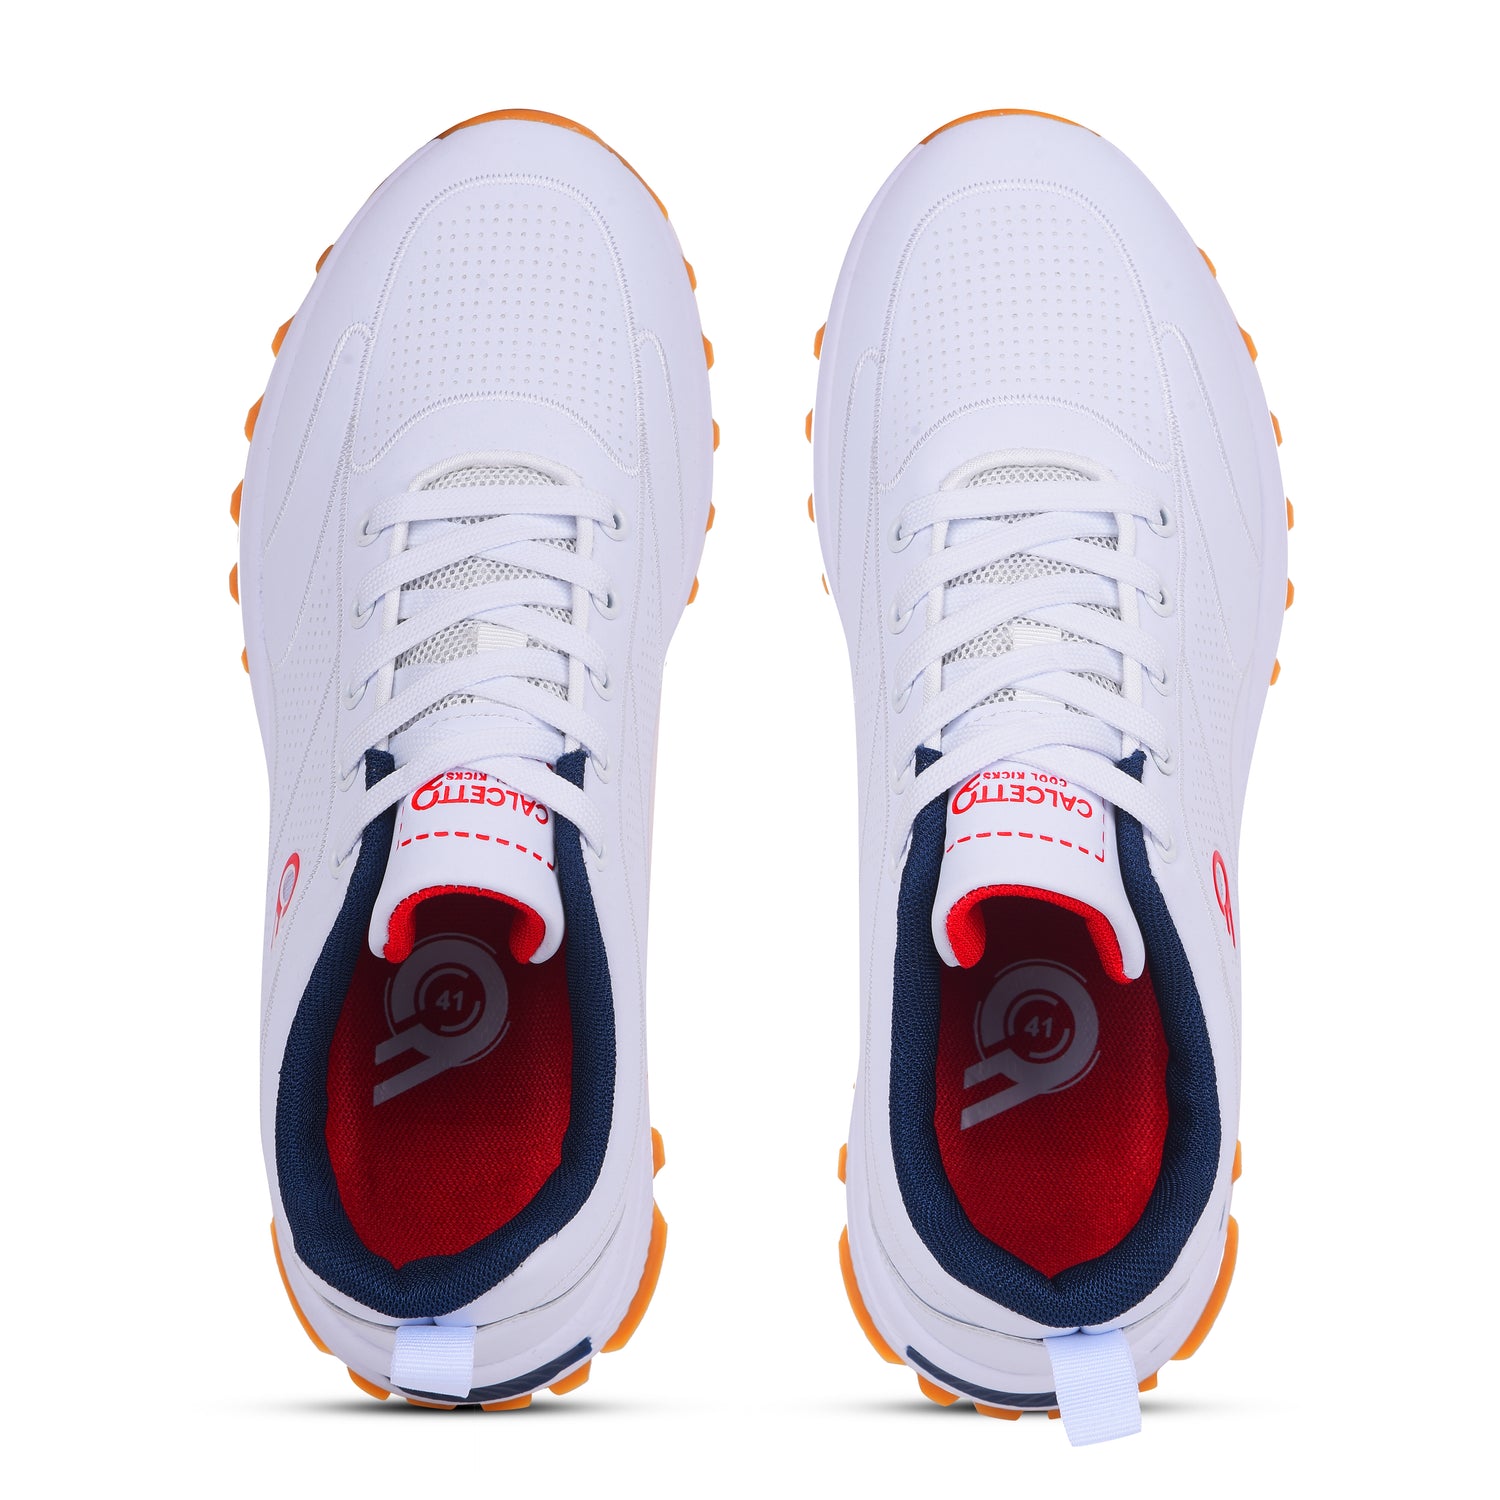 Calcetto CLT-1011 White Navy Sneaker For Men